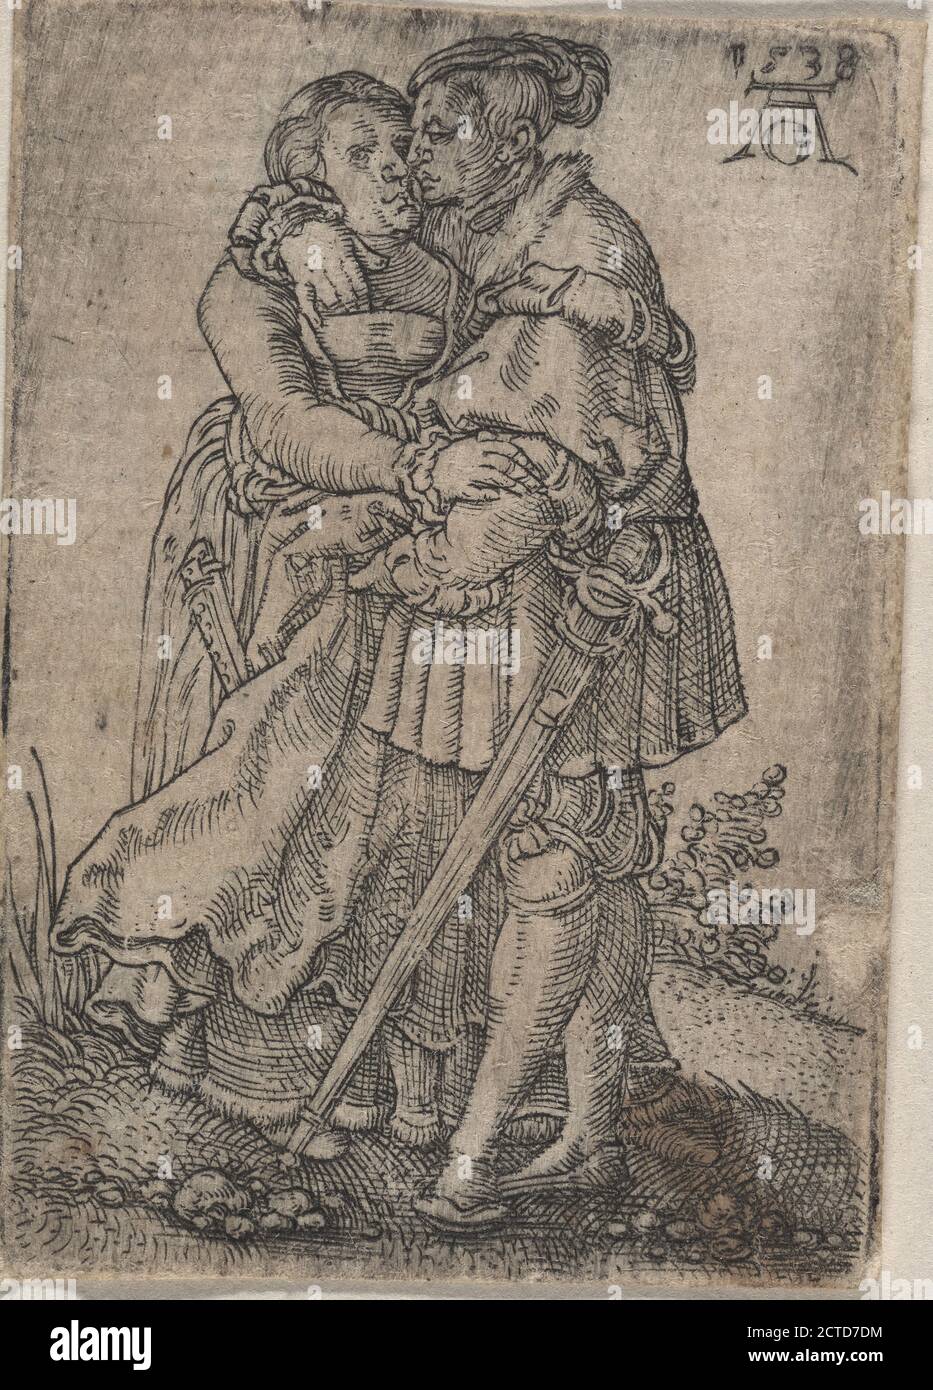 Couple Embracing, still image, Prints, 1538, Aldegrever, Heinrich, 1502 Stock Photo